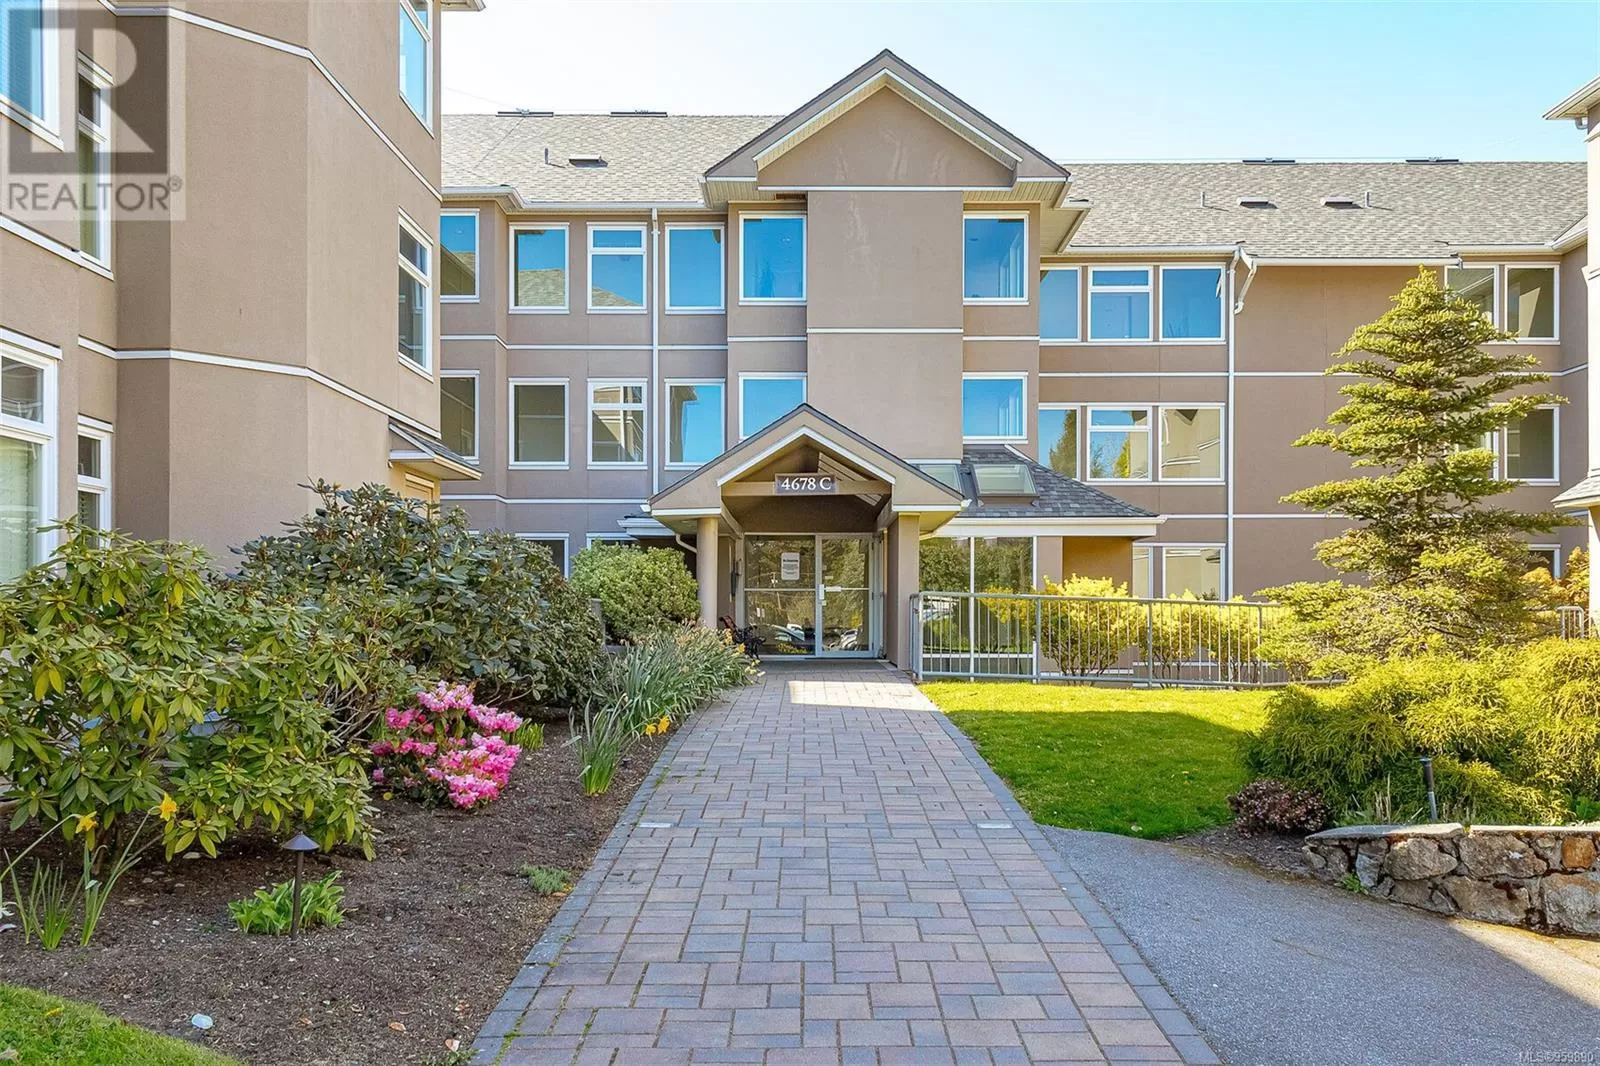 Apartment for rent: 207c 4678 Elk Lake Dr, Saanich, British Columbia V8Z 5M1